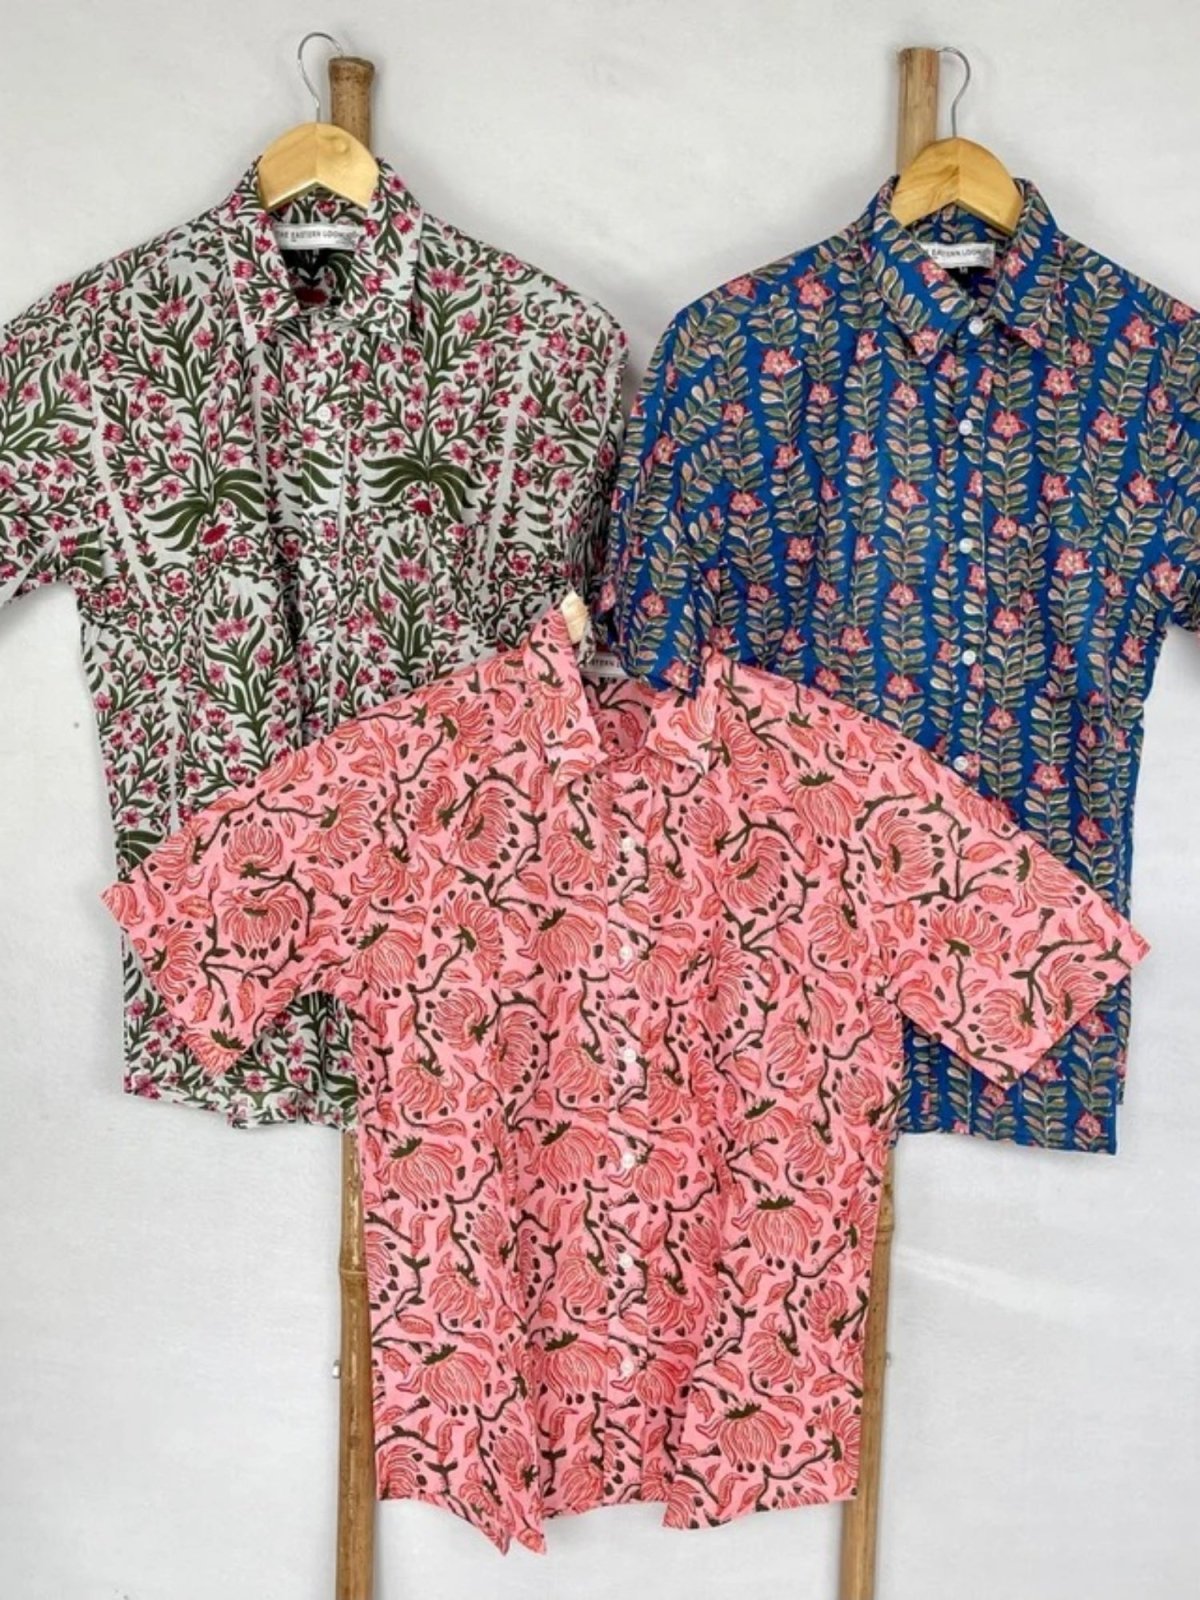 Men's Shirt Pure Cotton Handblock Print | Summer Cool Casual Beach Wear | Comfortable Garden Picnic Urban Man Dad Gift | Blue Floral Leaf - The Eastern Loom